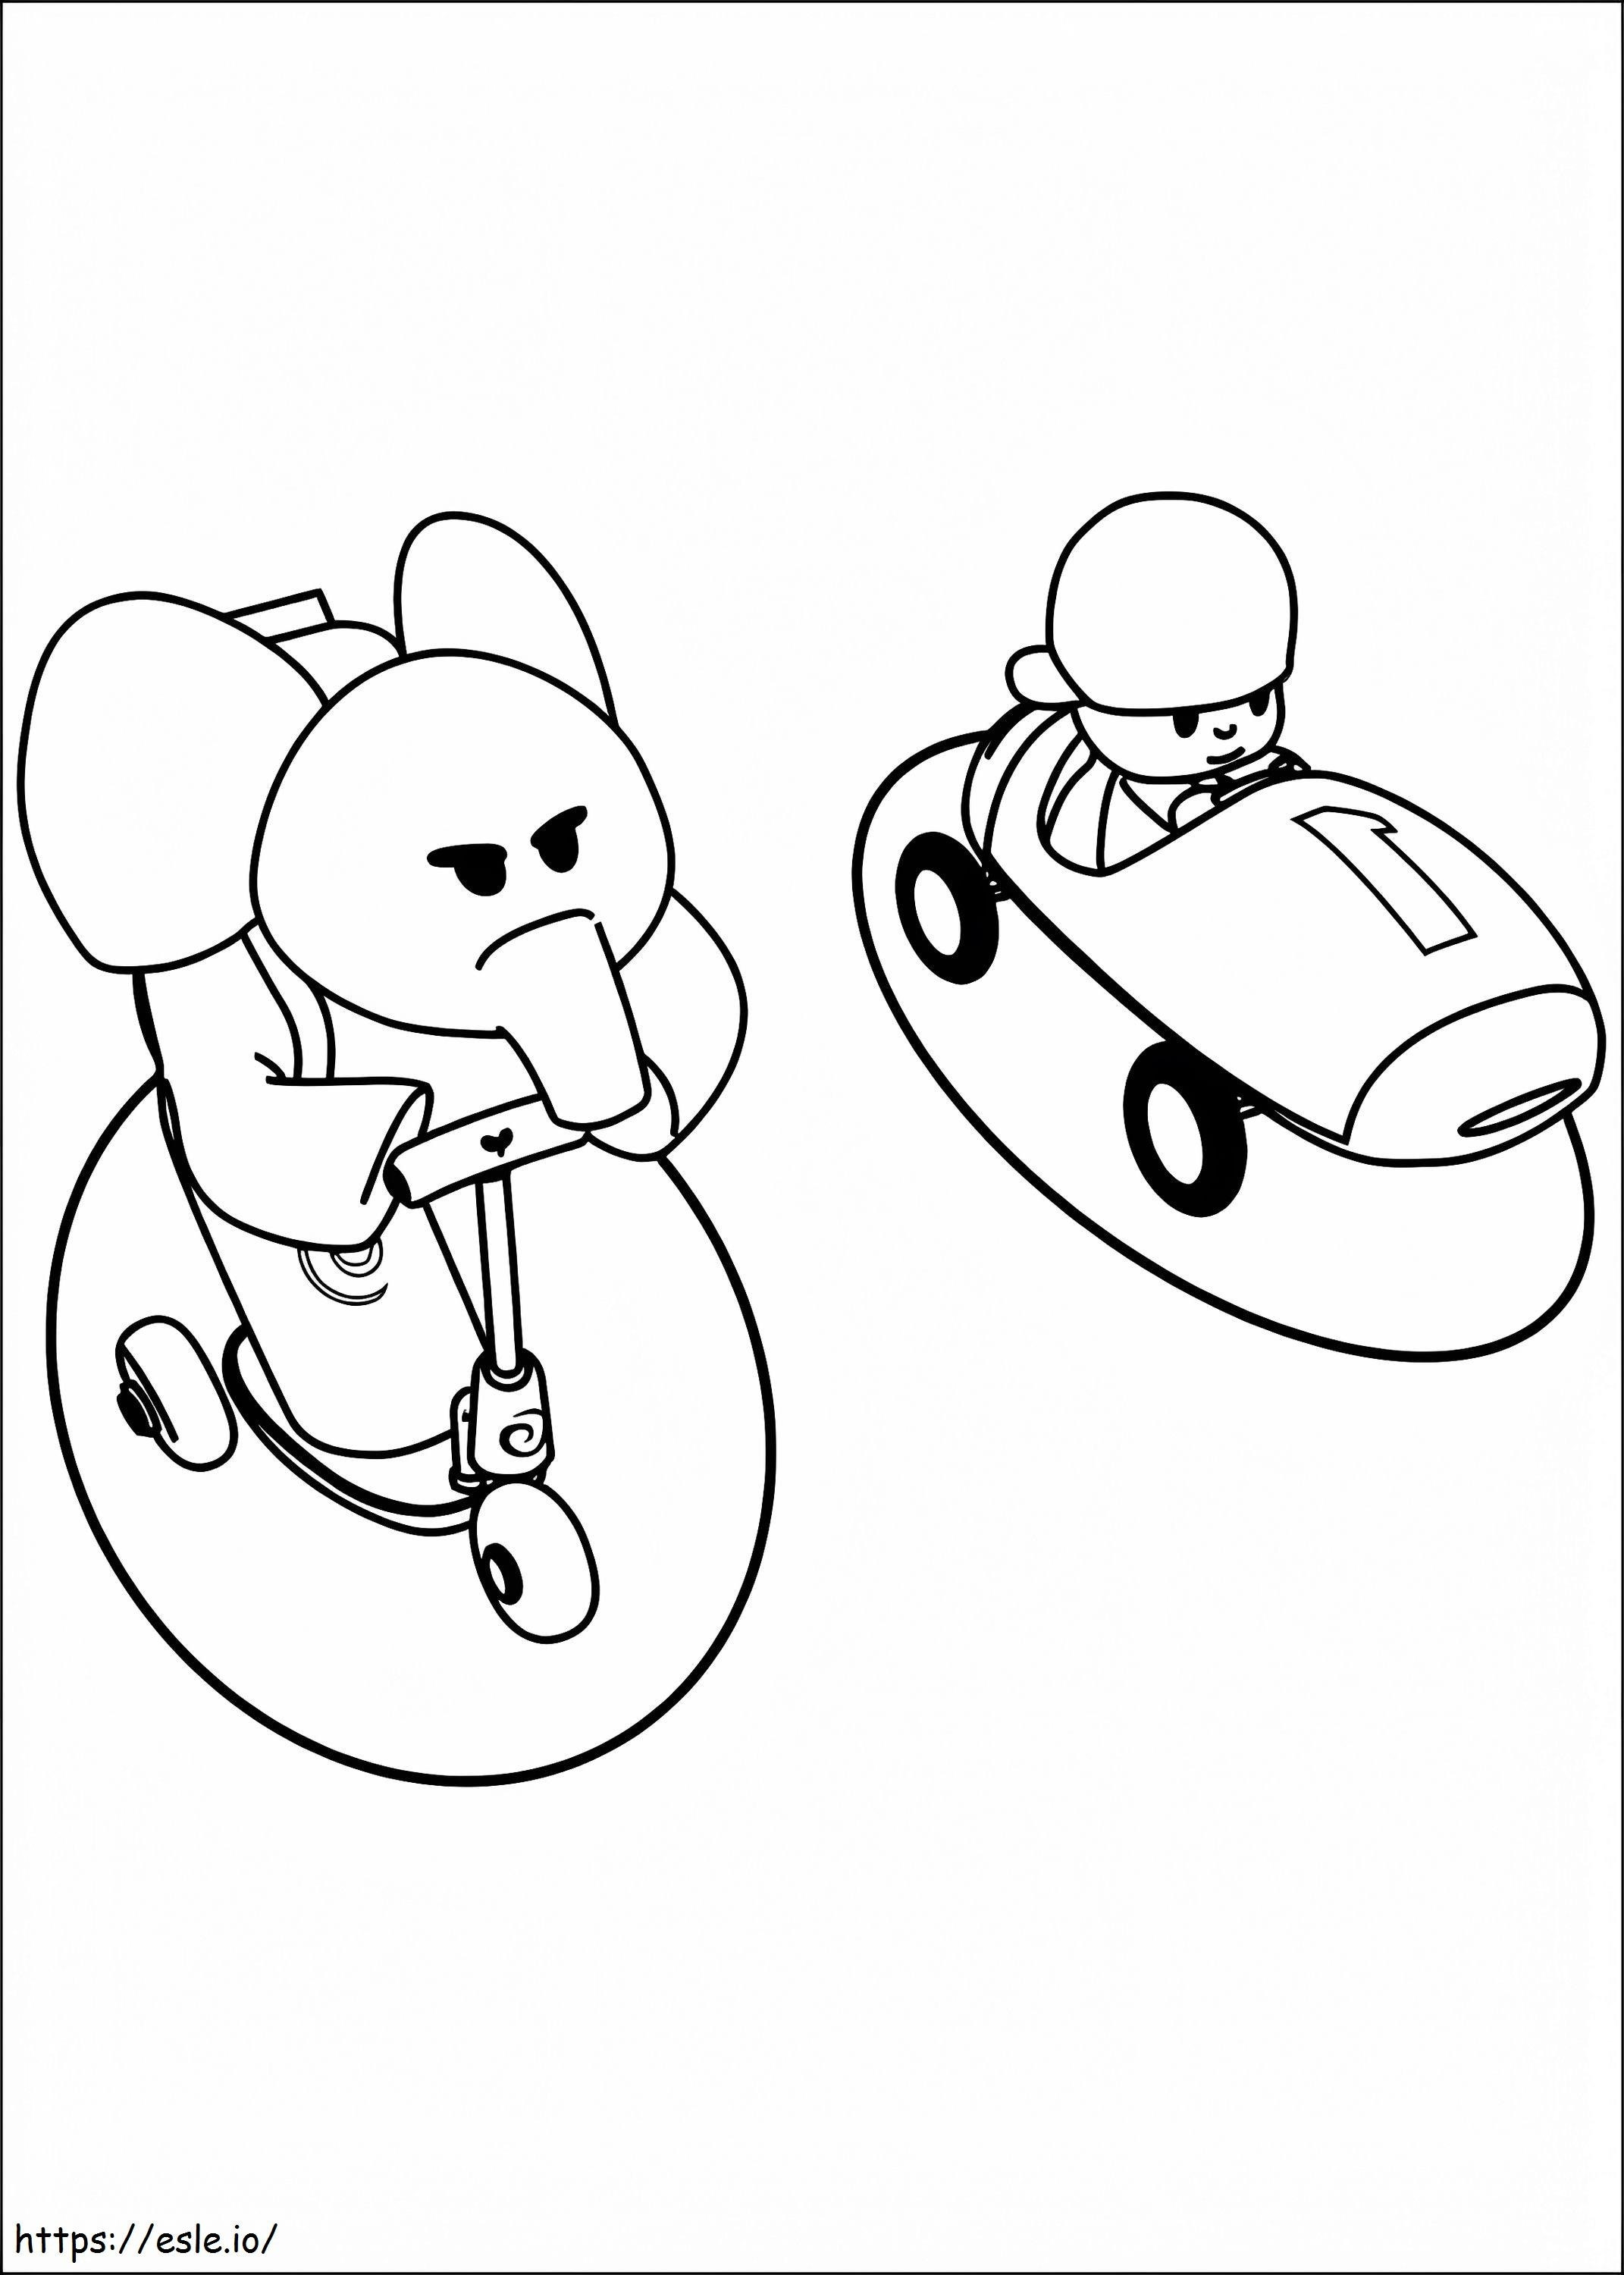 Pocoyo And Elly Racing coloring page